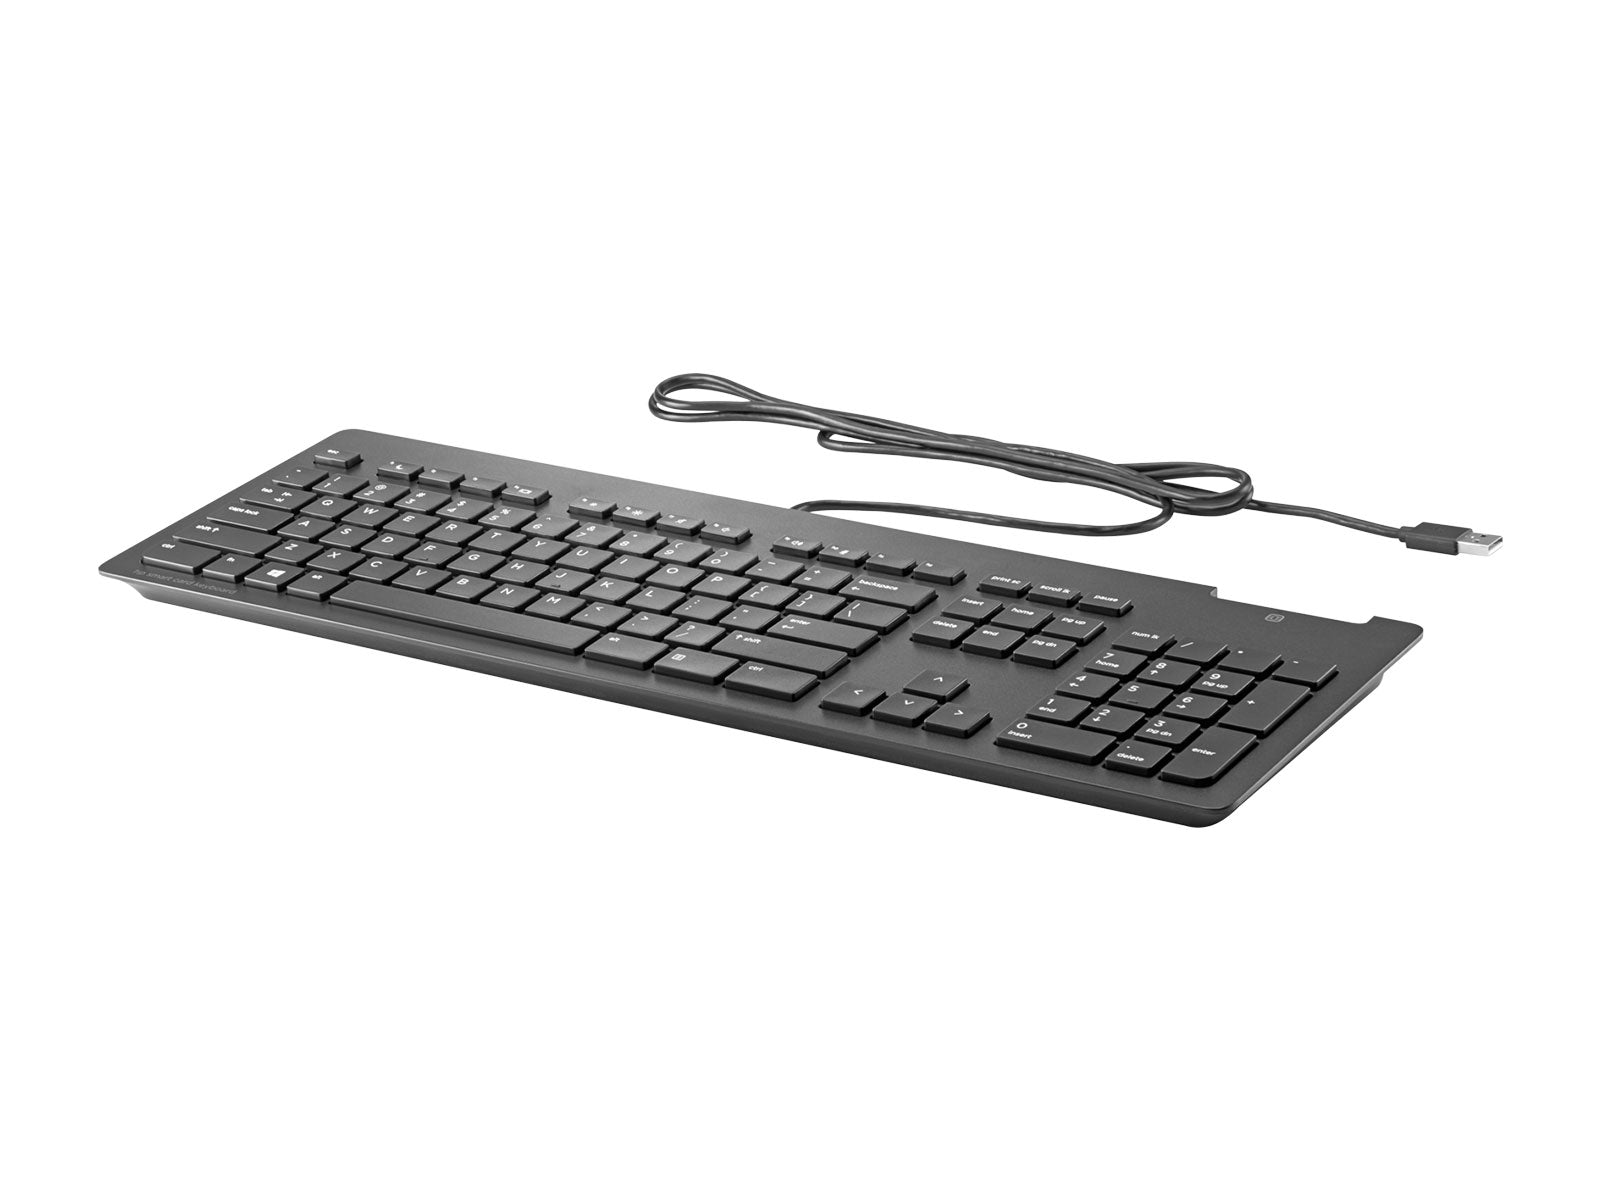 HP USB Slim Wired Keyboard (Z9H48AT#ABA) Monitors.com 